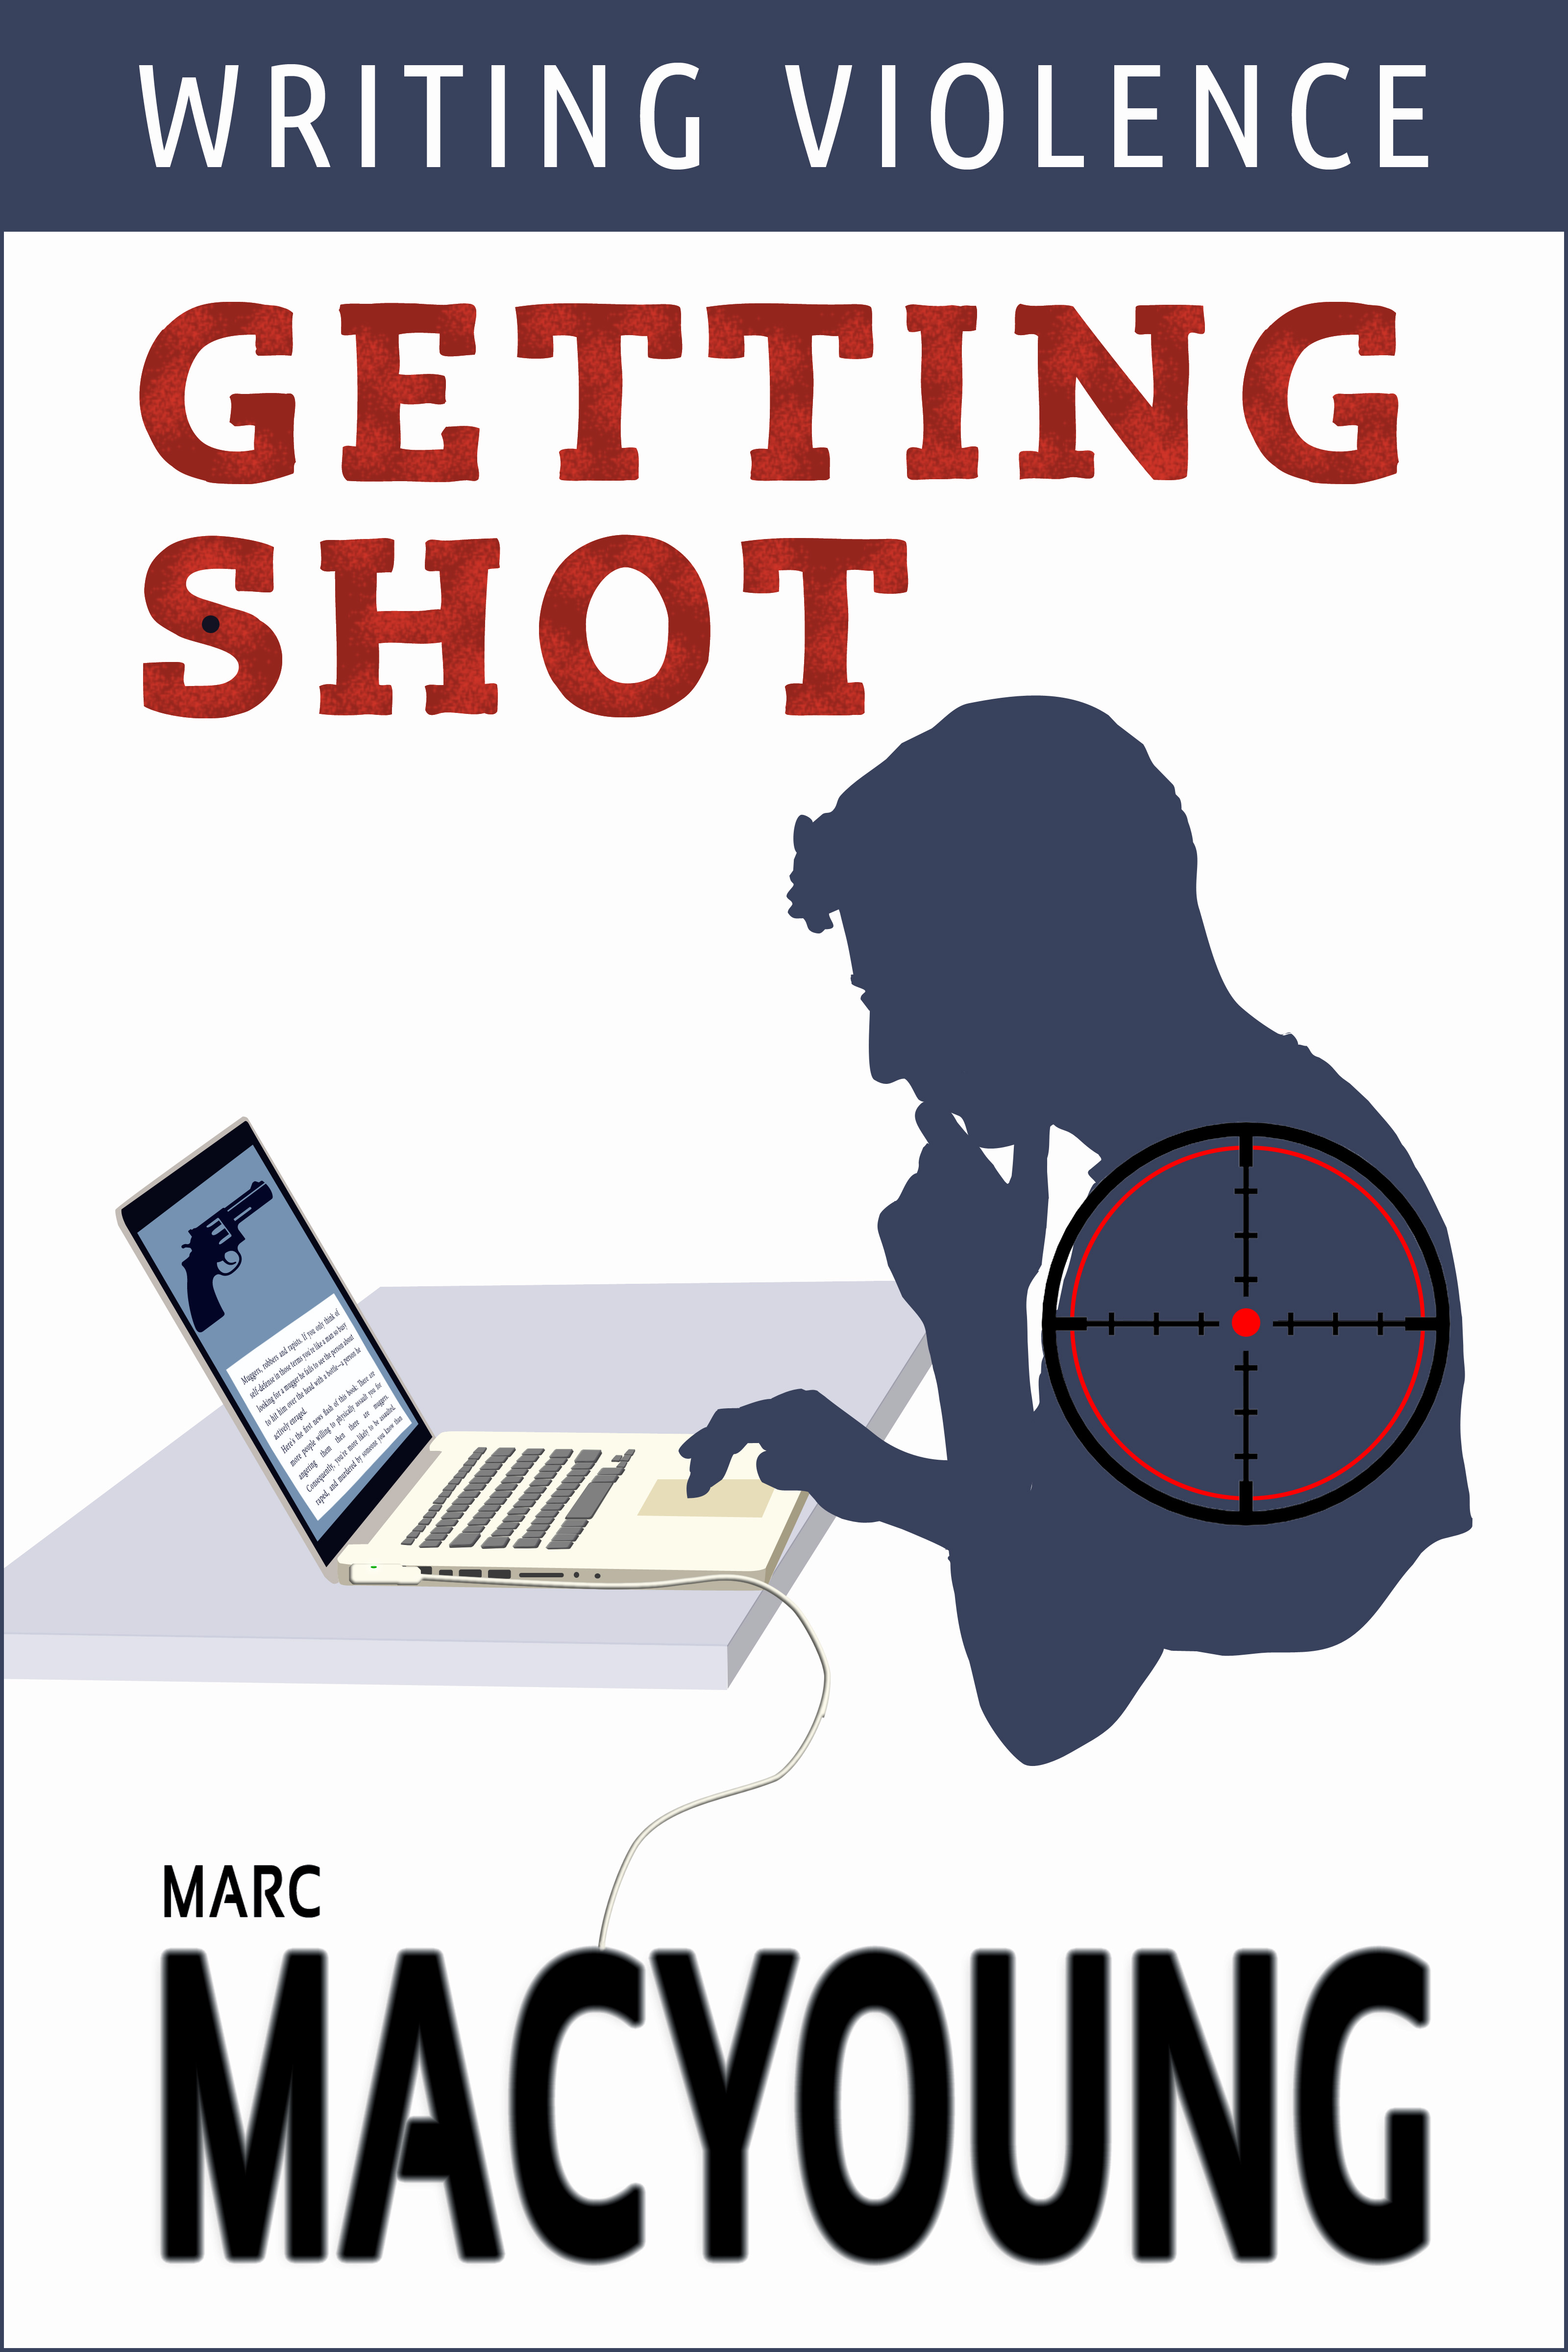 Writing Violence: Getting shot